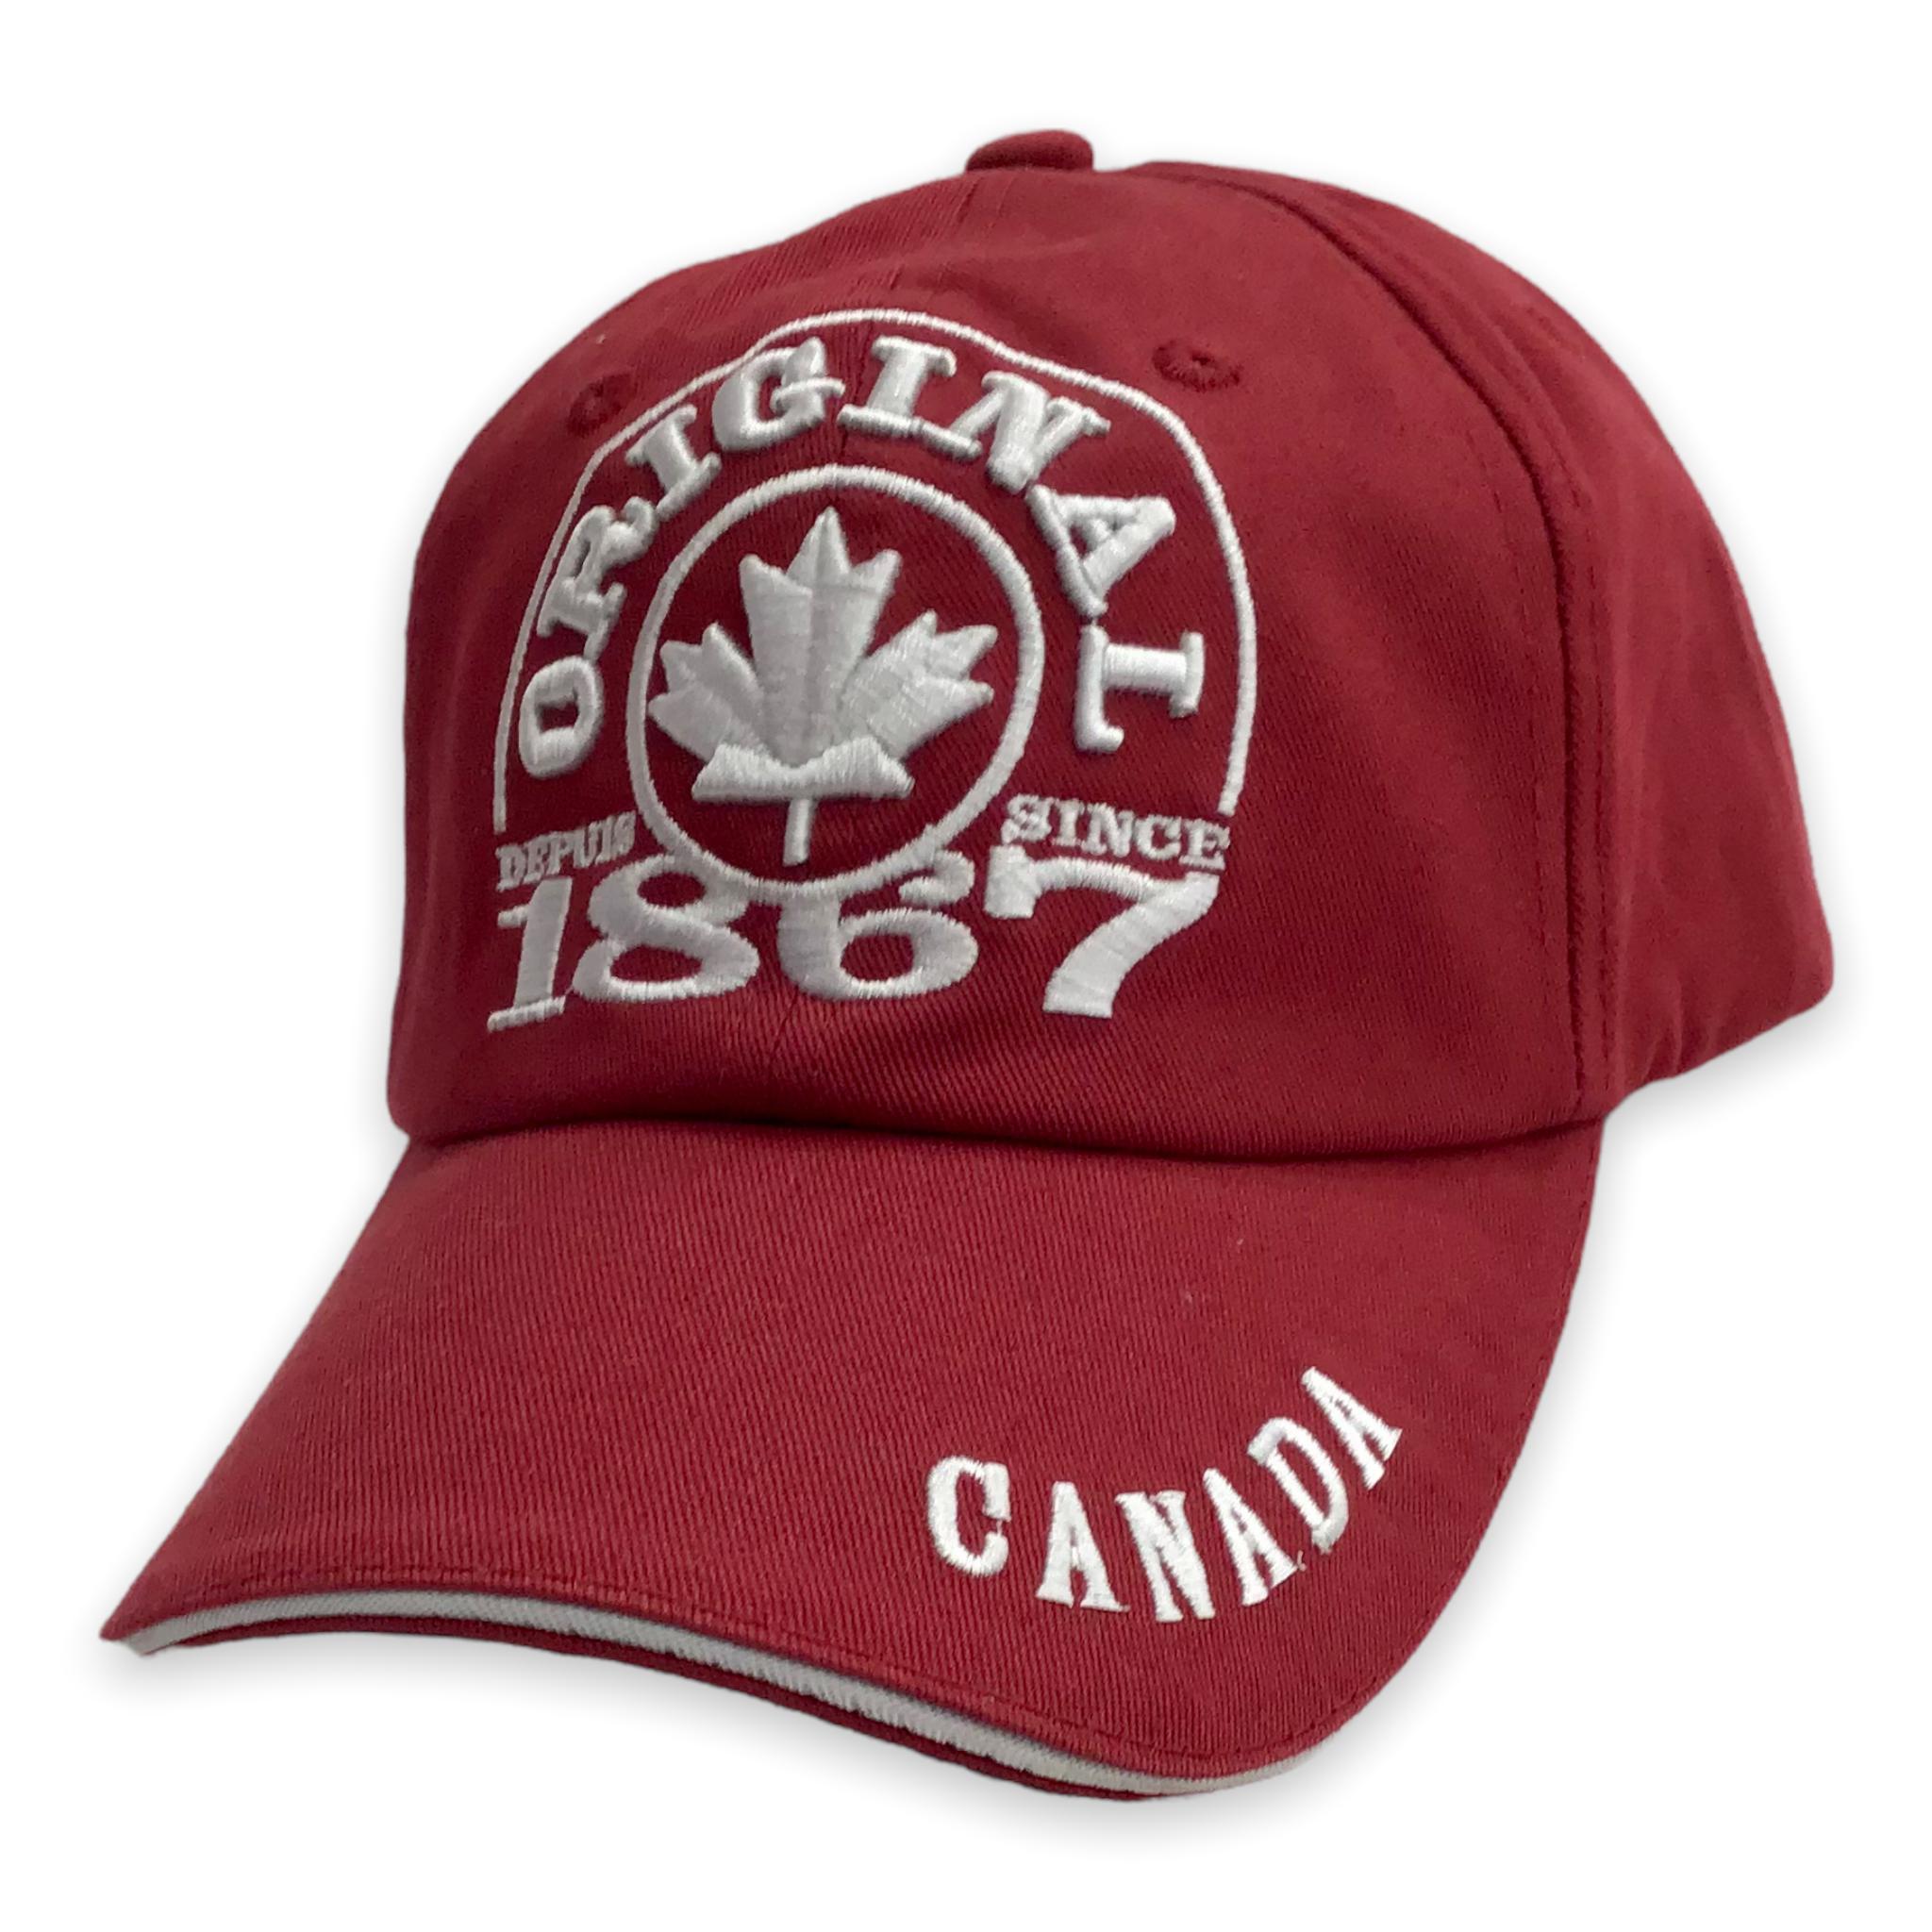 Baseball Cap - Original Since 1867 Canada Adjustable Hat